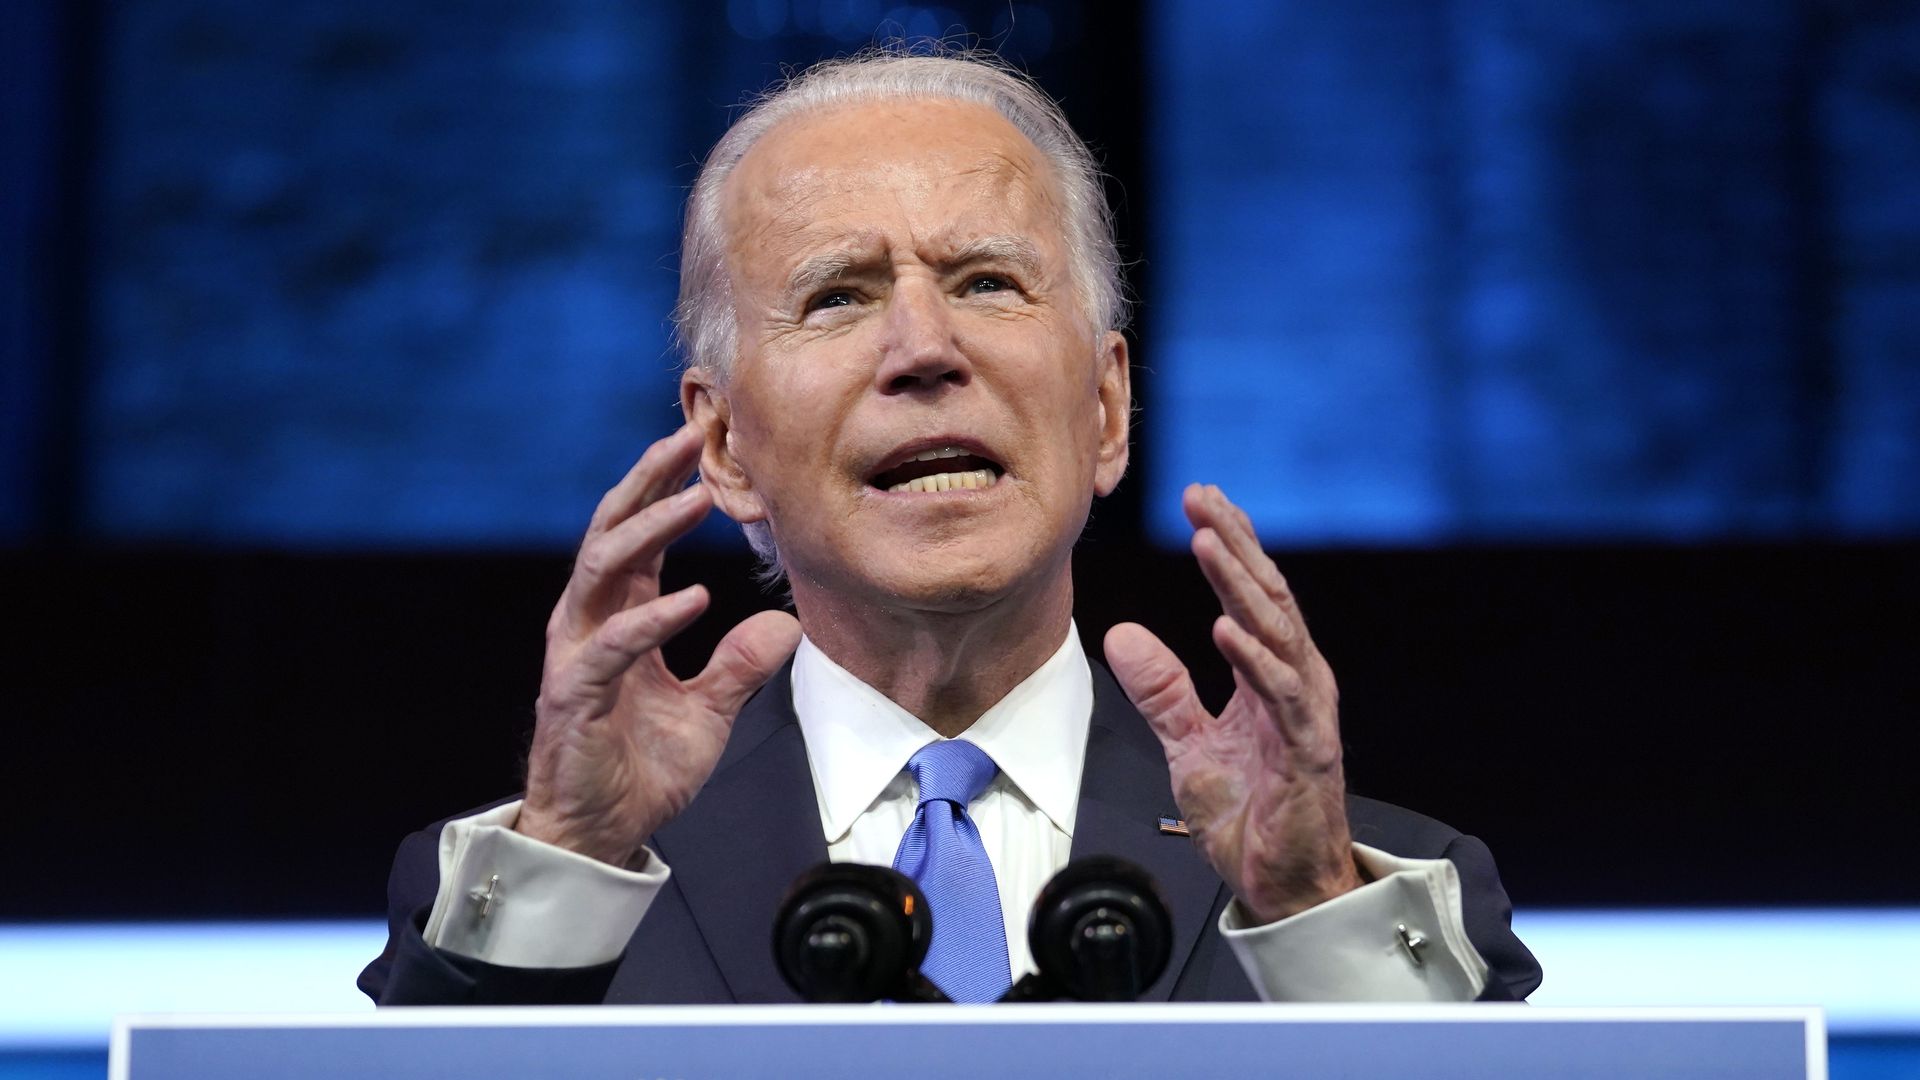 Photo of Joe Biden speaking over a podium with both hands raised